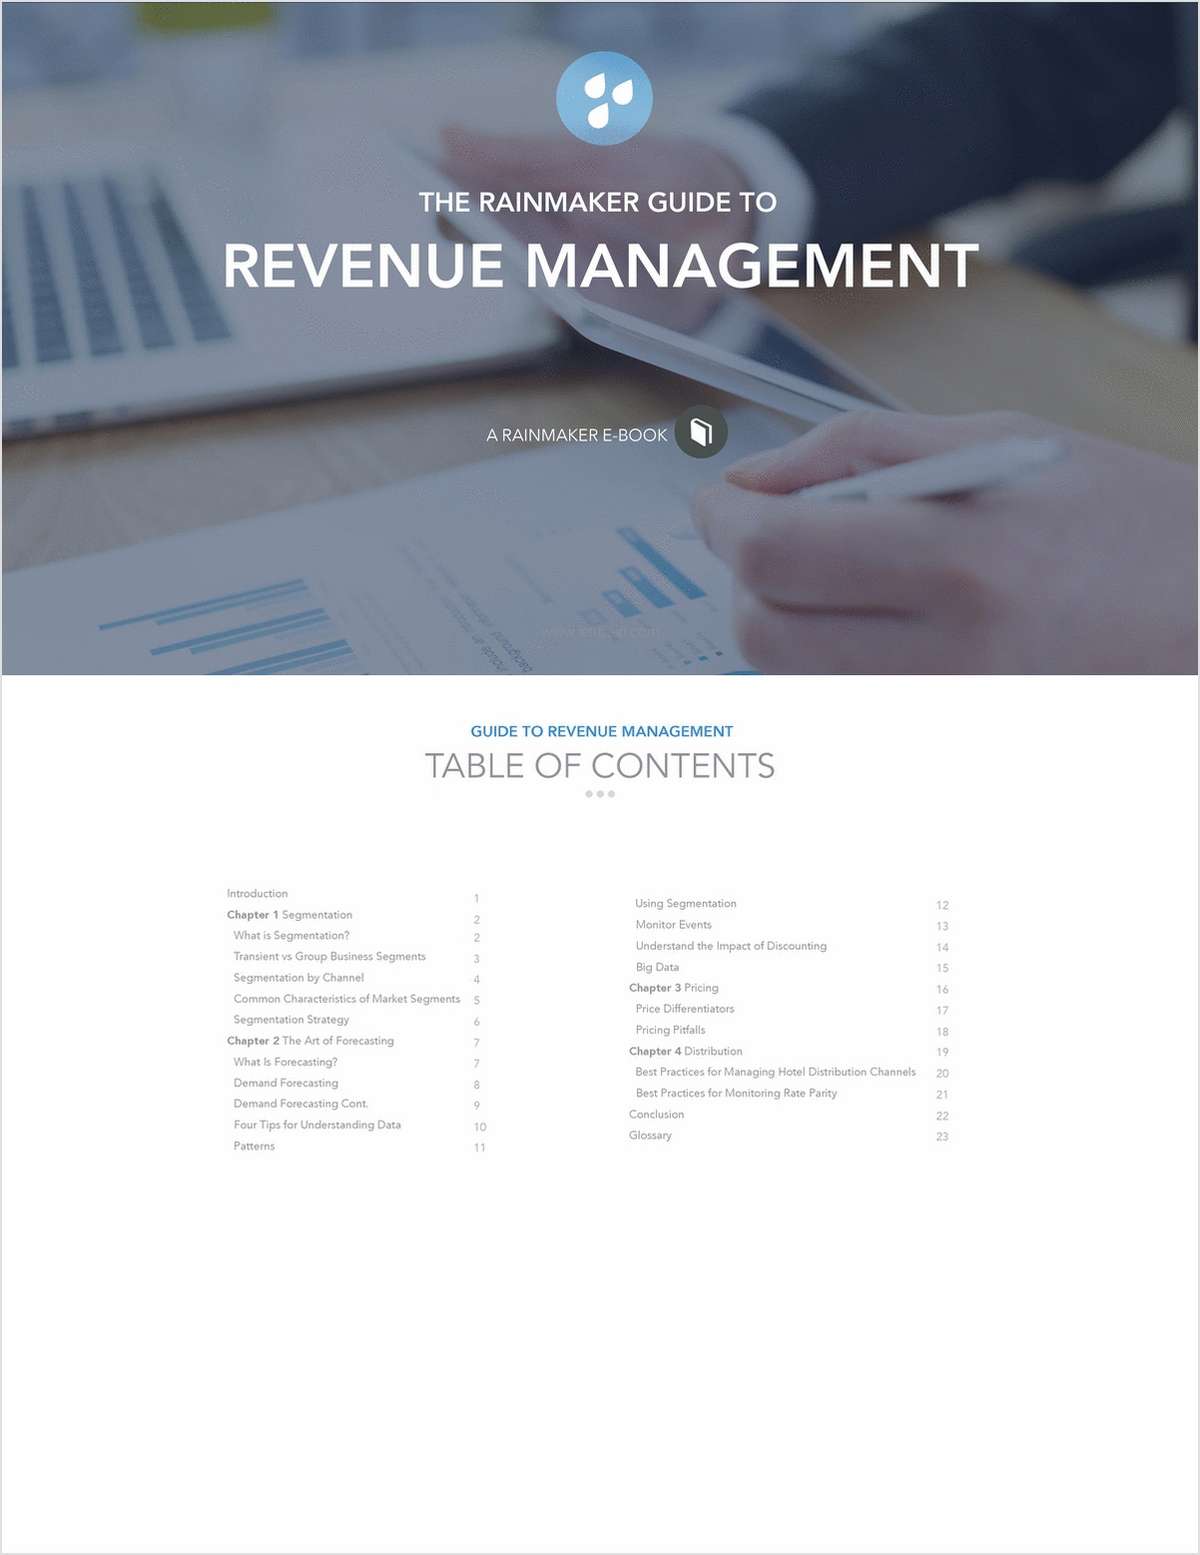 Guide to Revenue Management